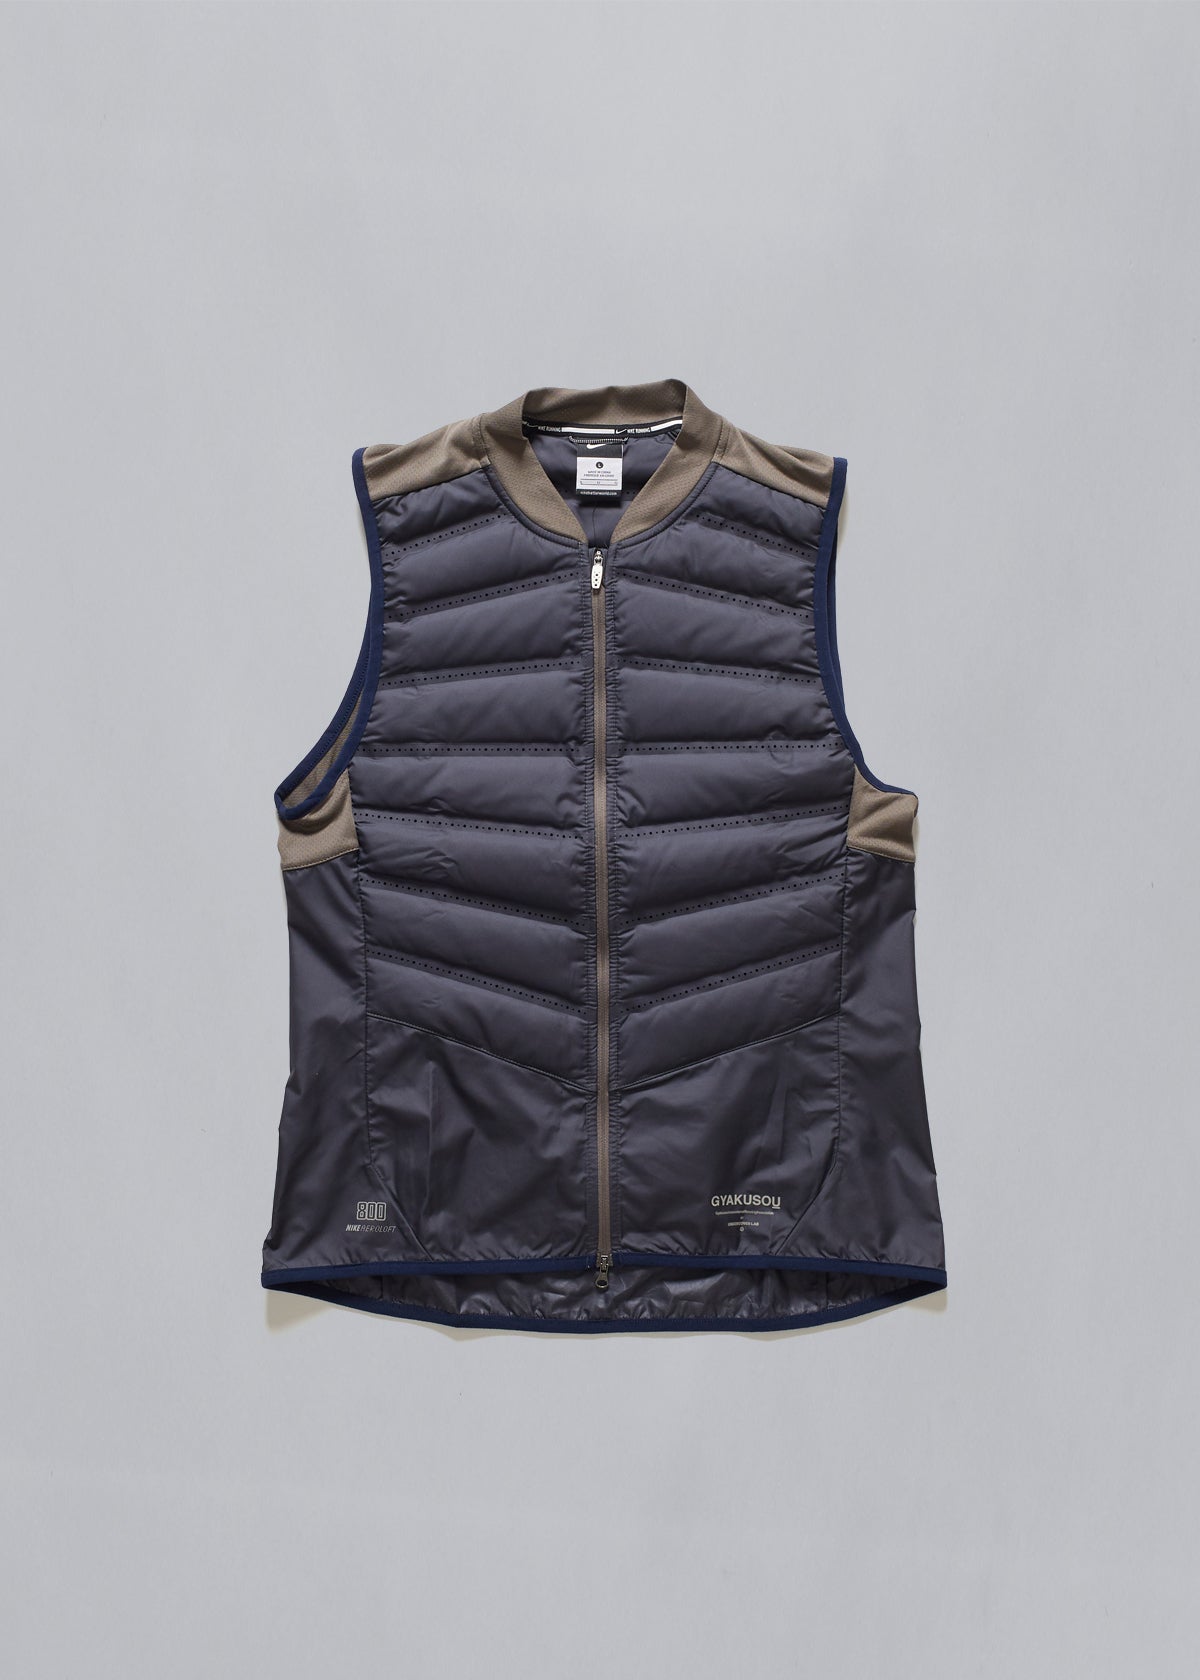 Nike/Undercover Gyakusou Aeroloft 800 Vest AW2016 - Medium - The Archivist Store